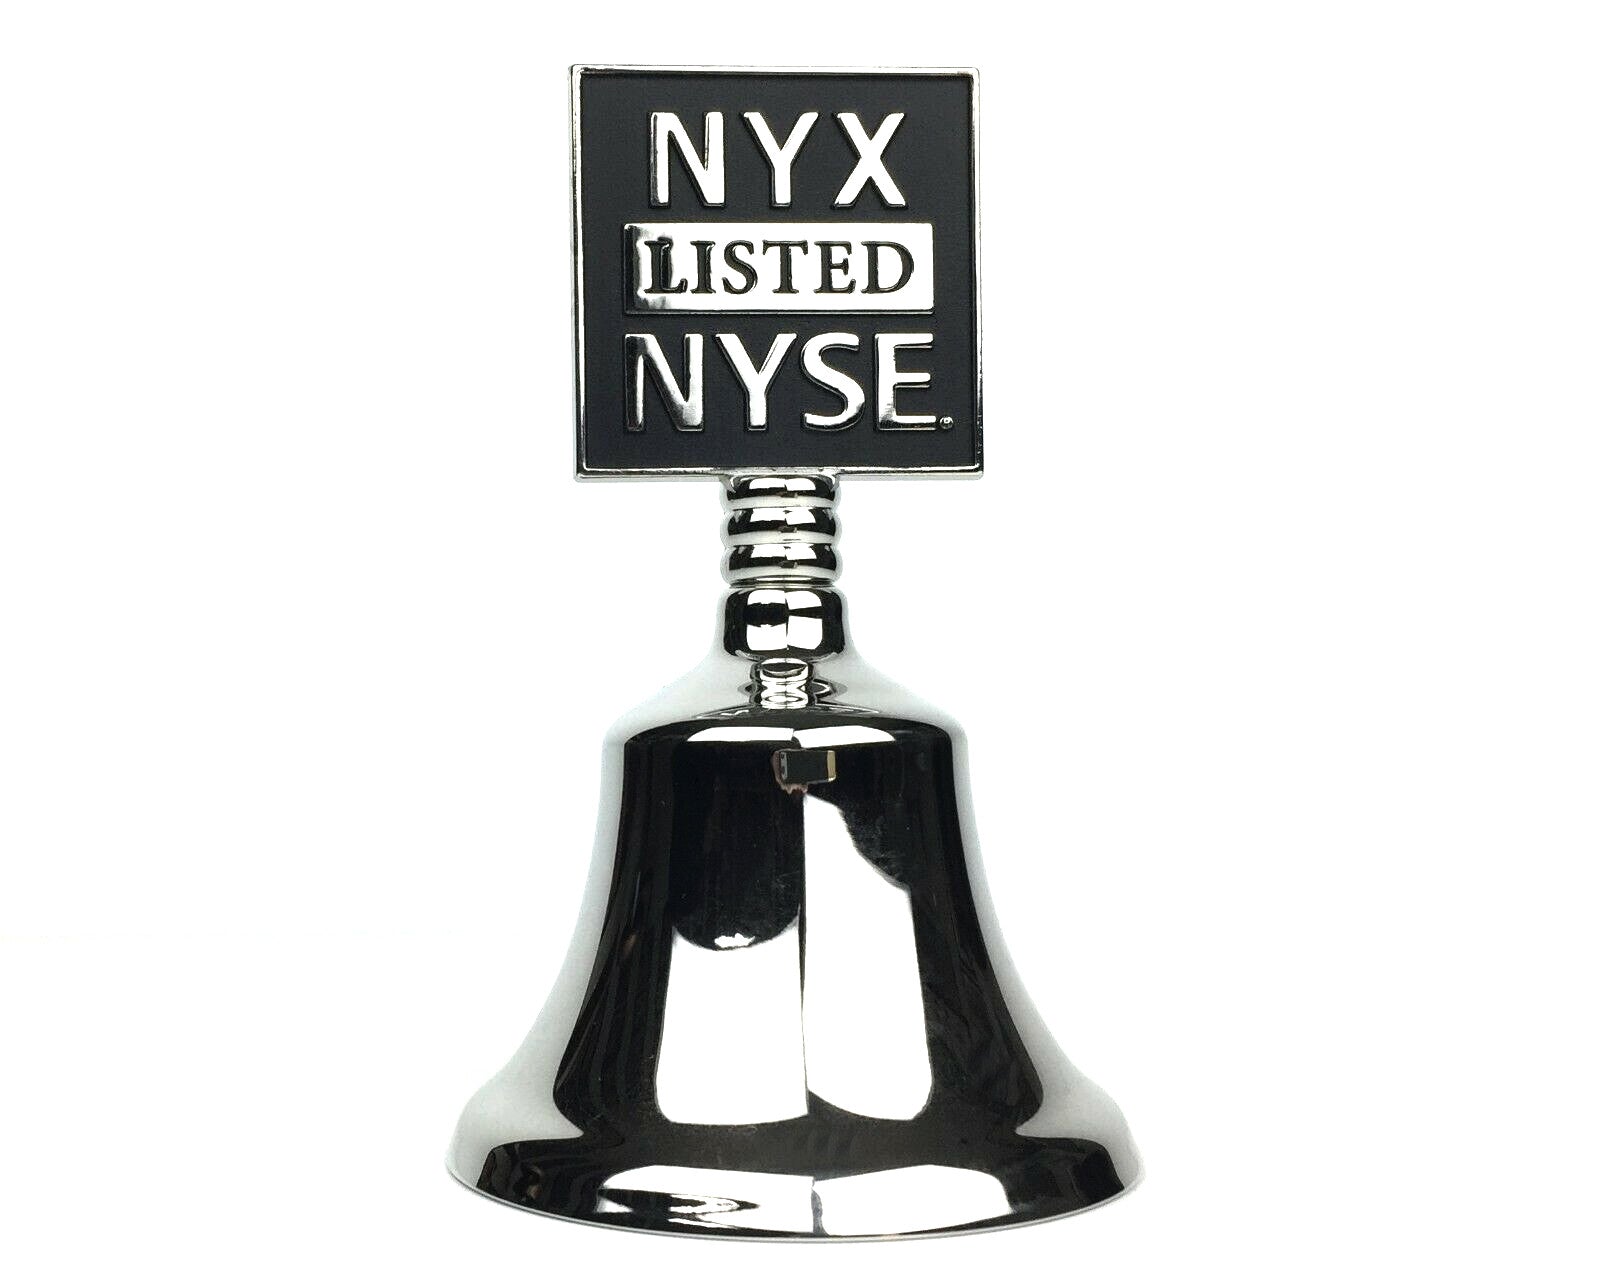 NYX NYSE IPO Listing Bell - Wall Street Treasures